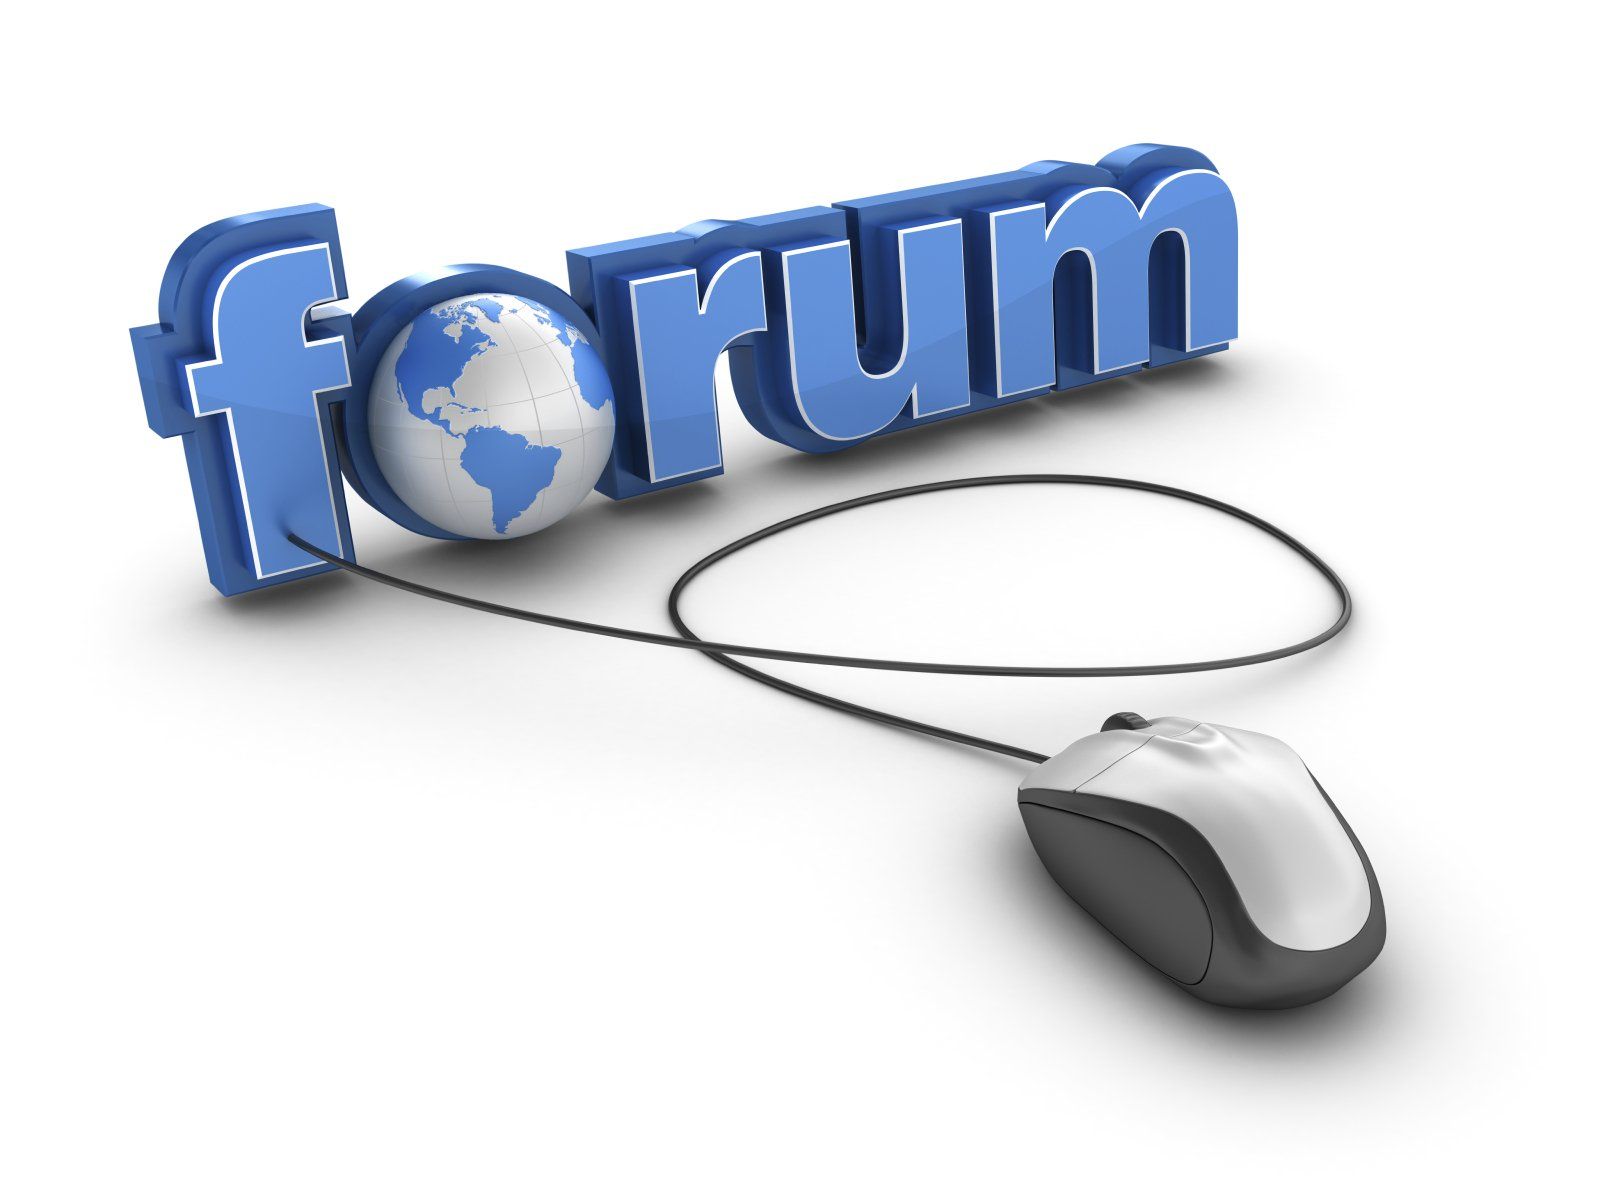 Fora 2 com. Интернет форум. Веб форум. Блоги и форумы. Веб форум картинки.